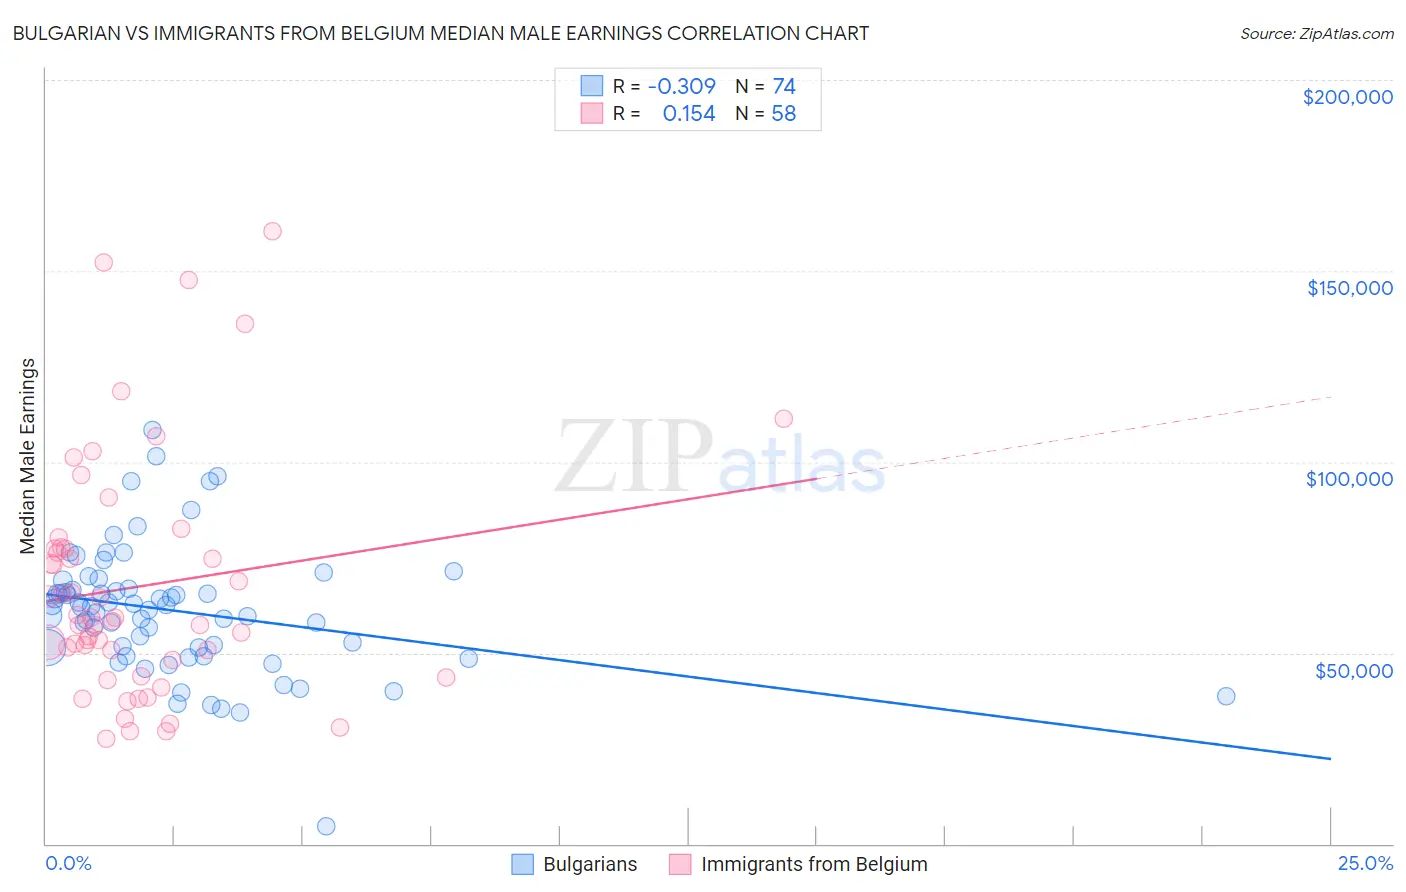 Bulgarian vs Immigrants from Belgium Median Male Earnings